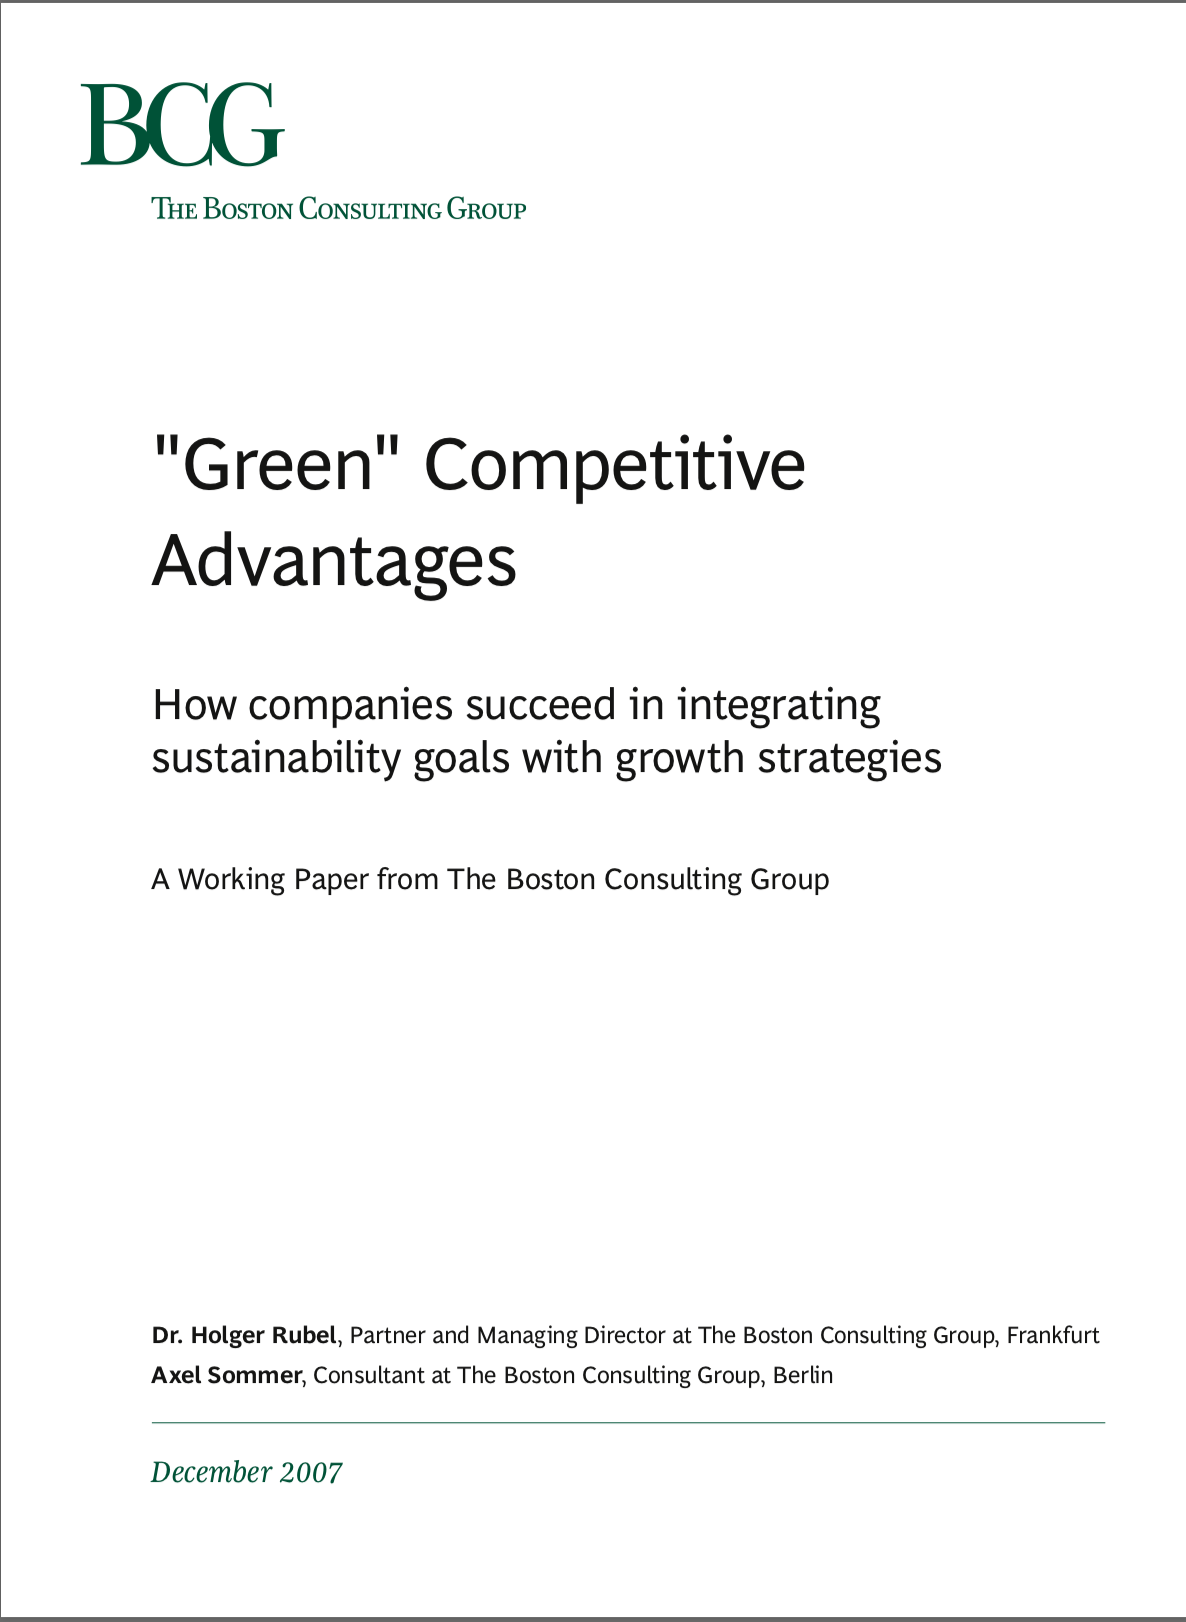 Green Competitive Advantages